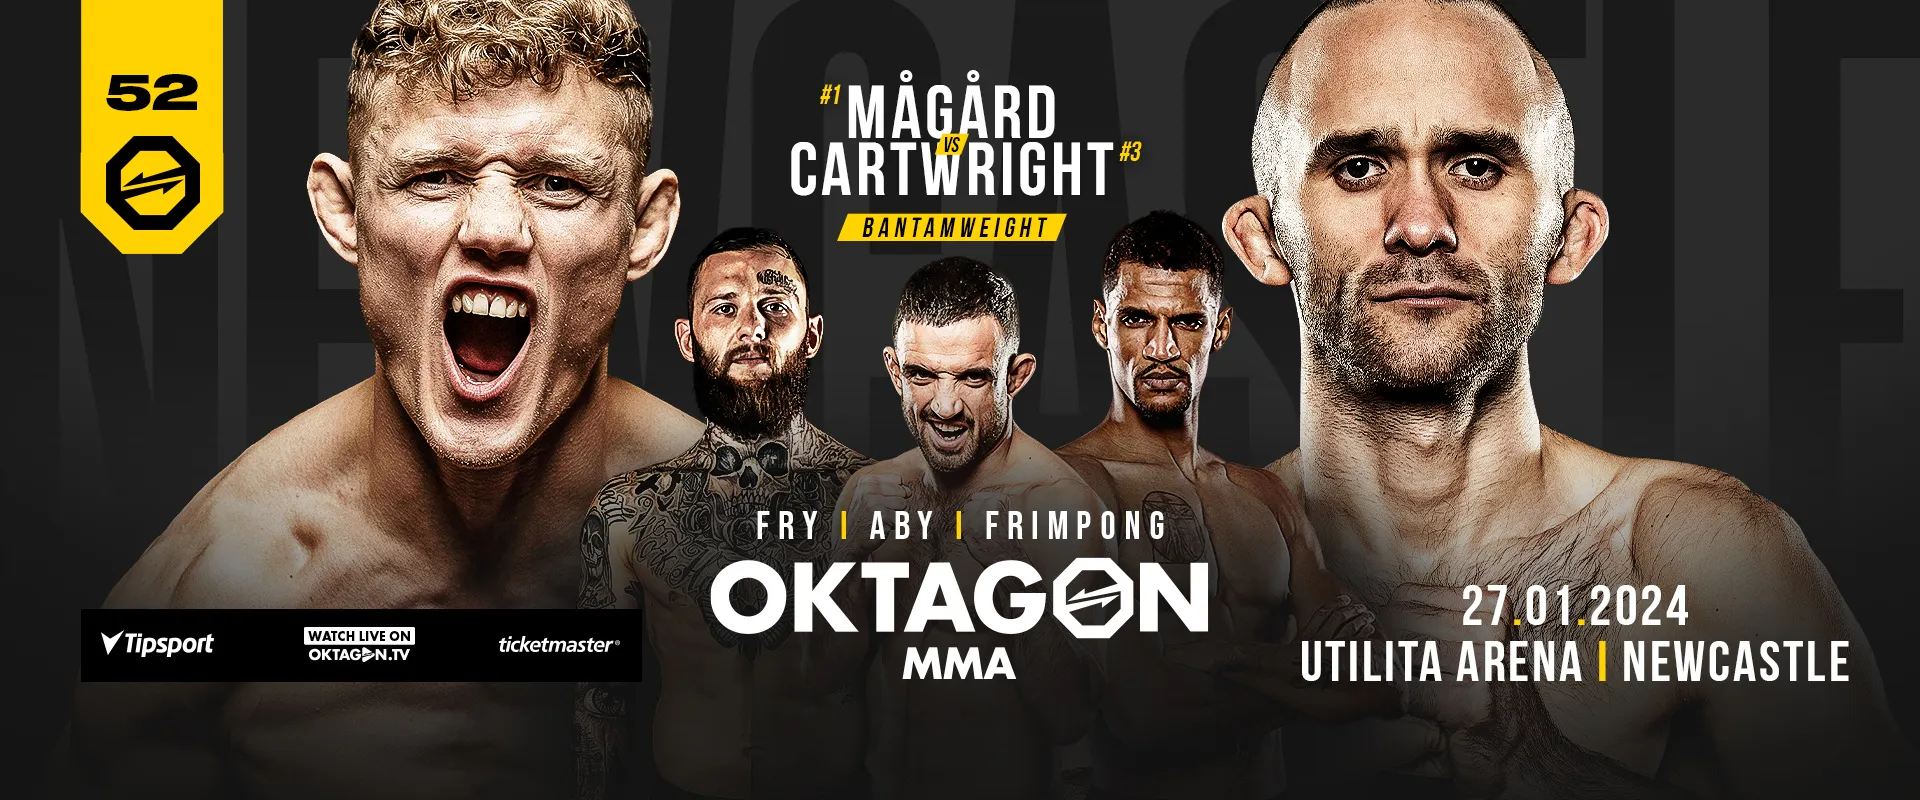 Image for Oktagon 52 Results – Magard vs Cartwright